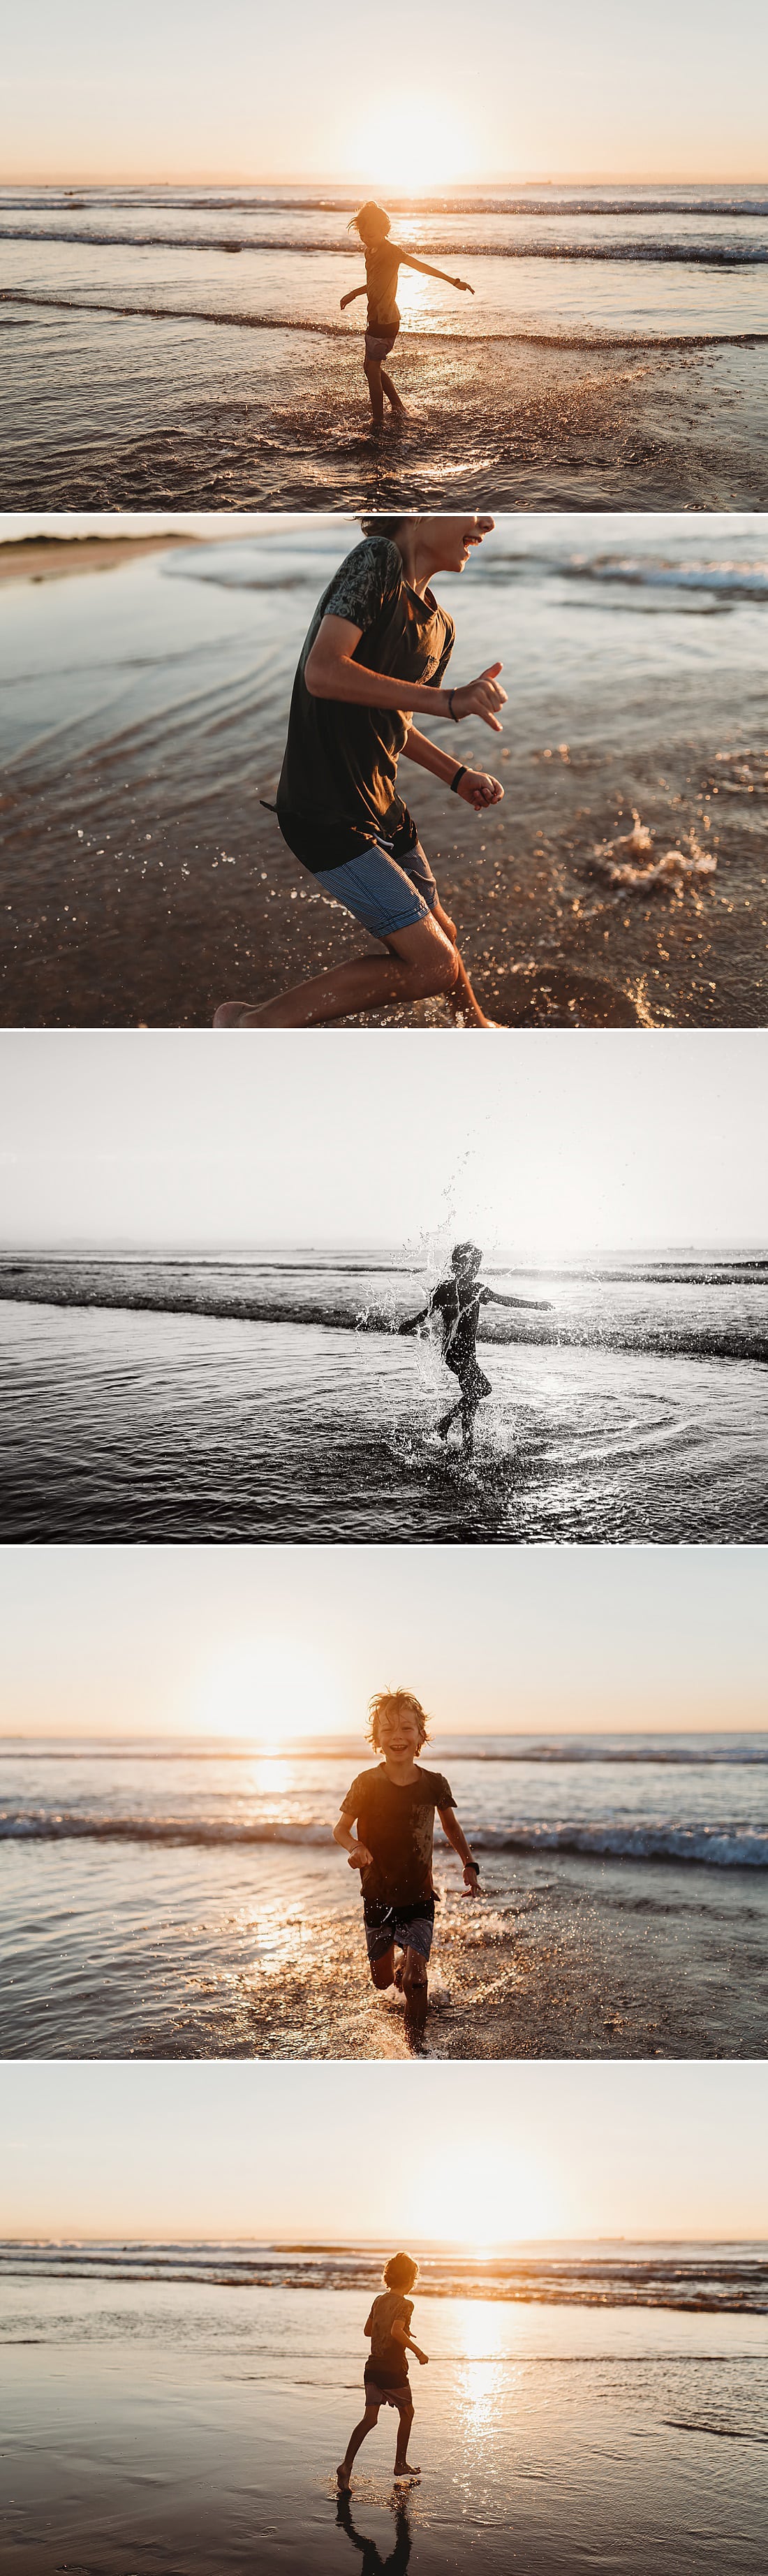 Lifestyle-family-photography-sunrise-beach-fun